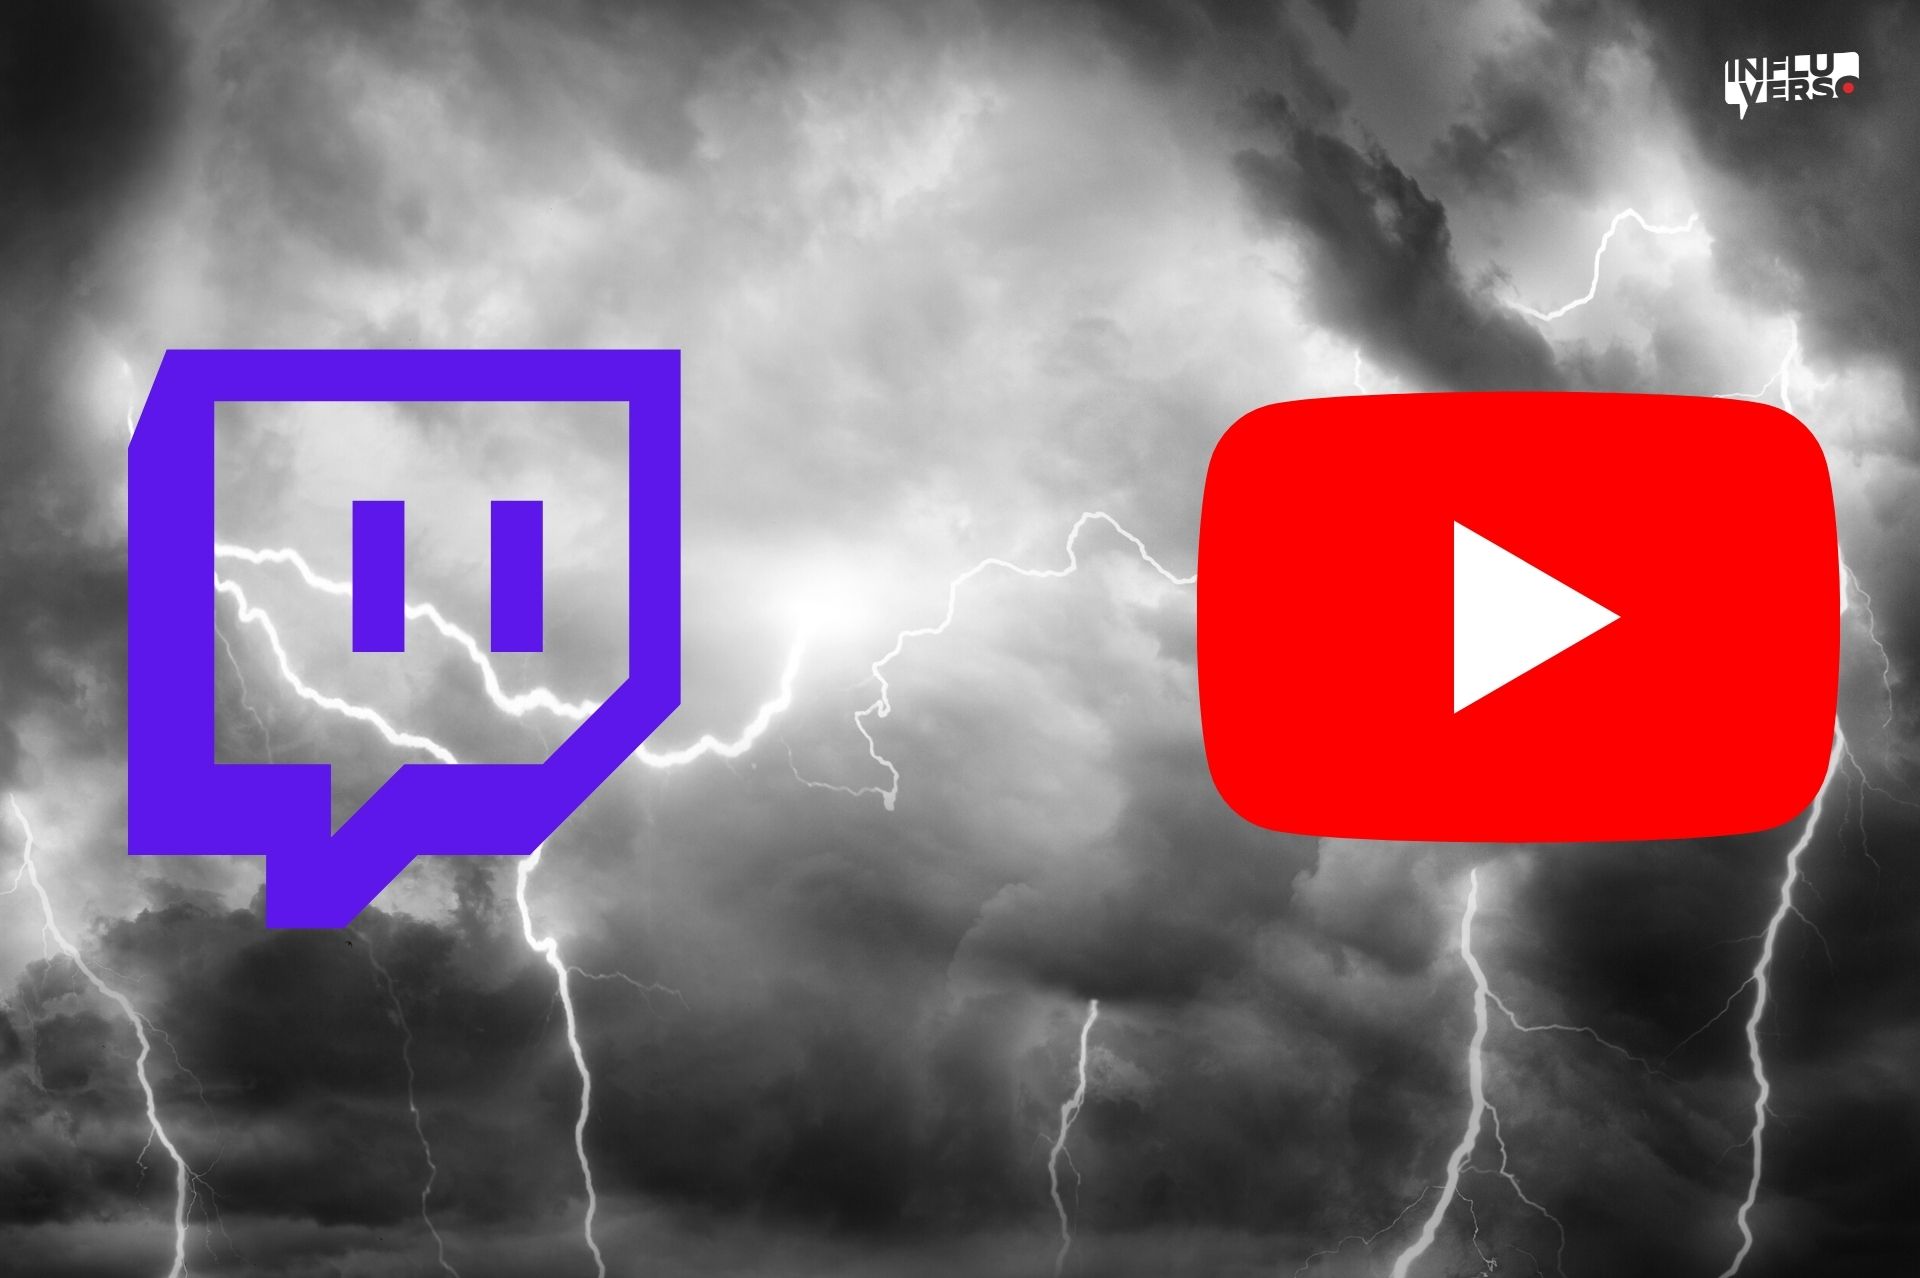 Youtube Gaming vs Twitch, Stream war